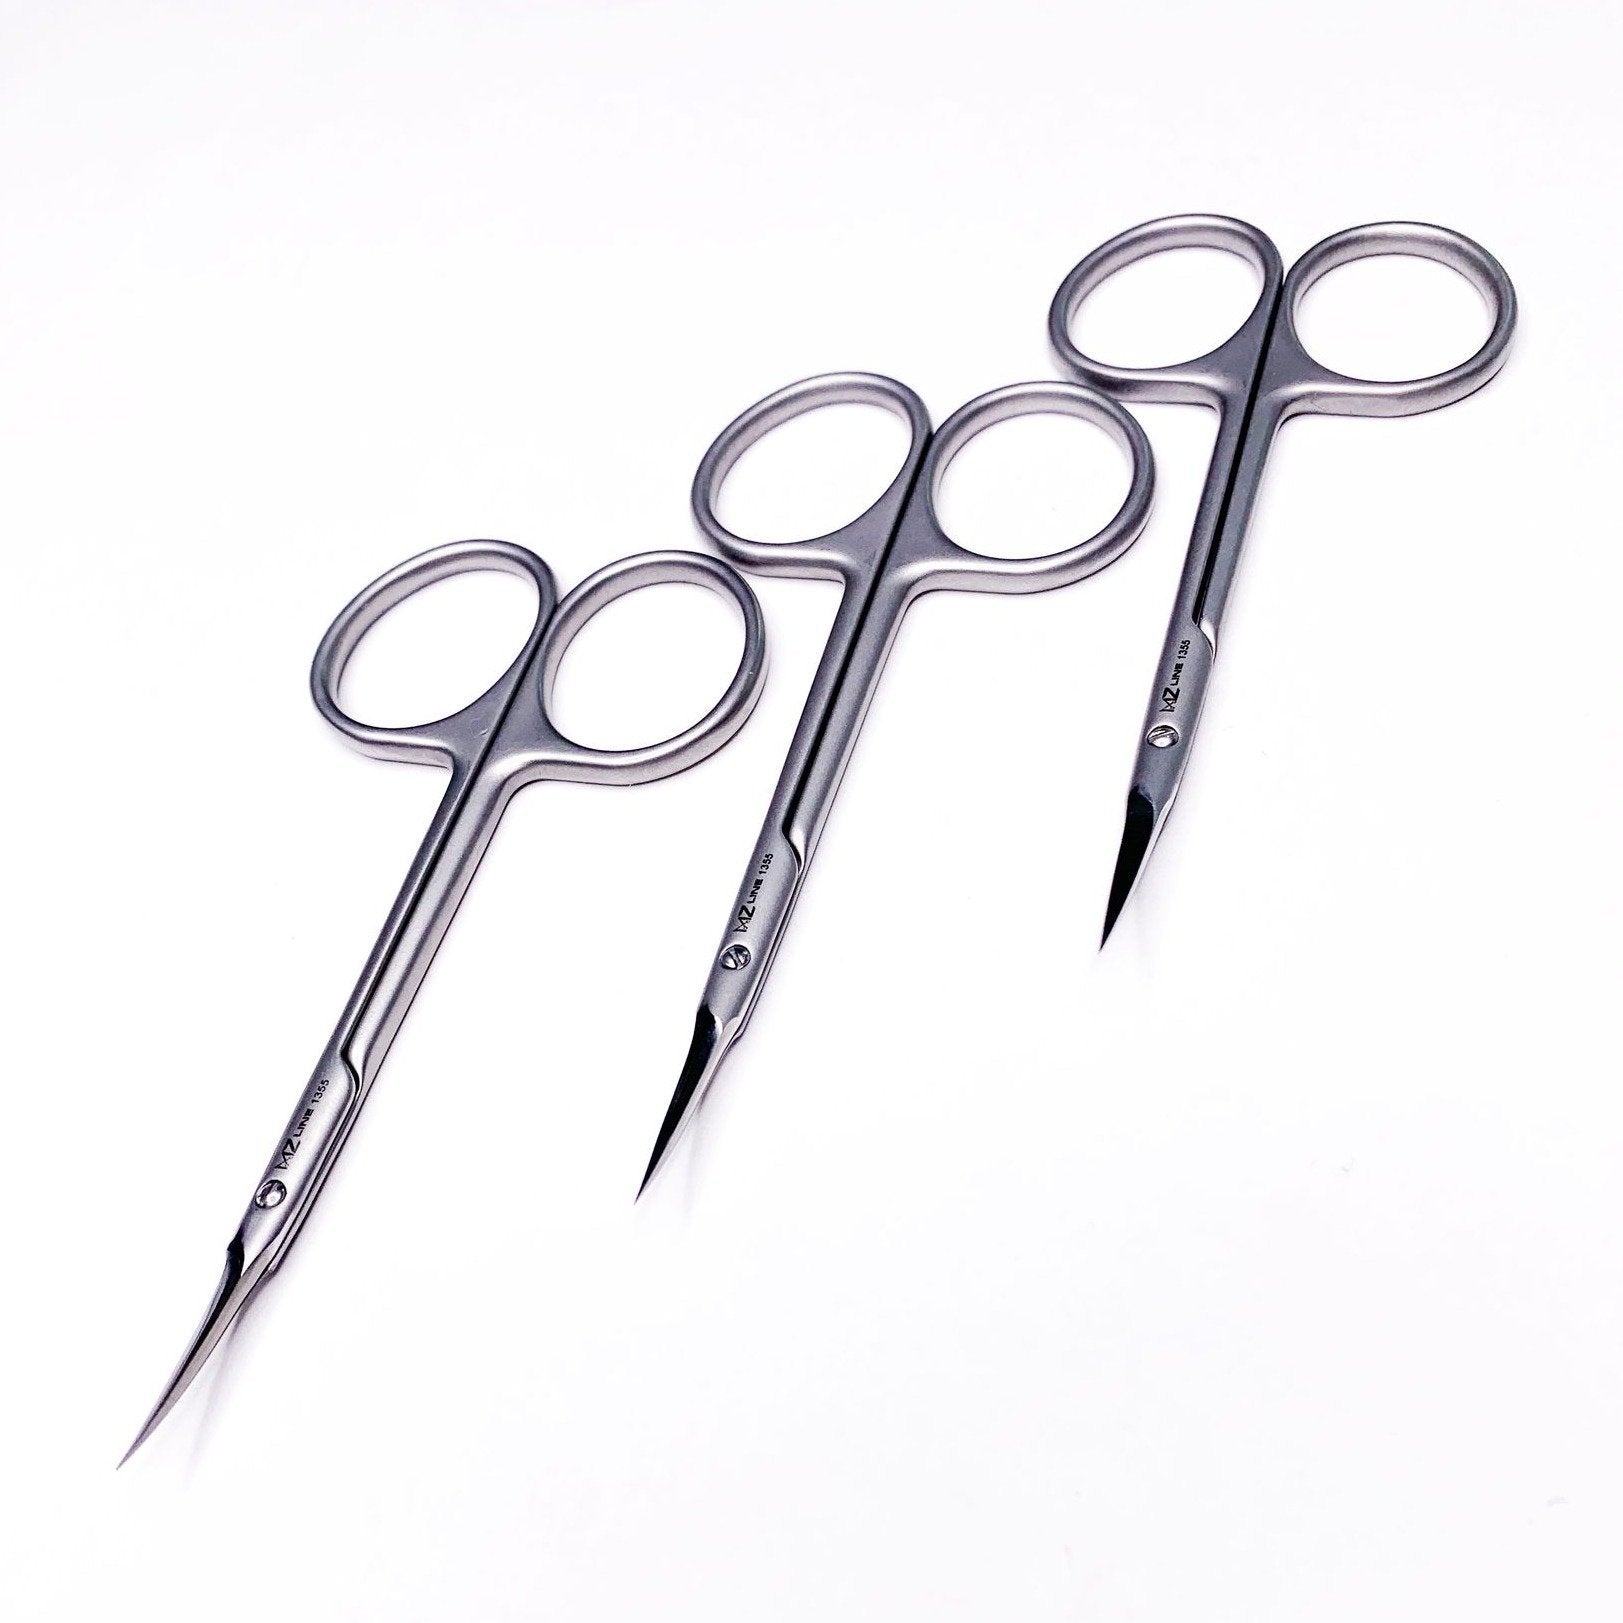 Cycled Steel Cuticle scissors